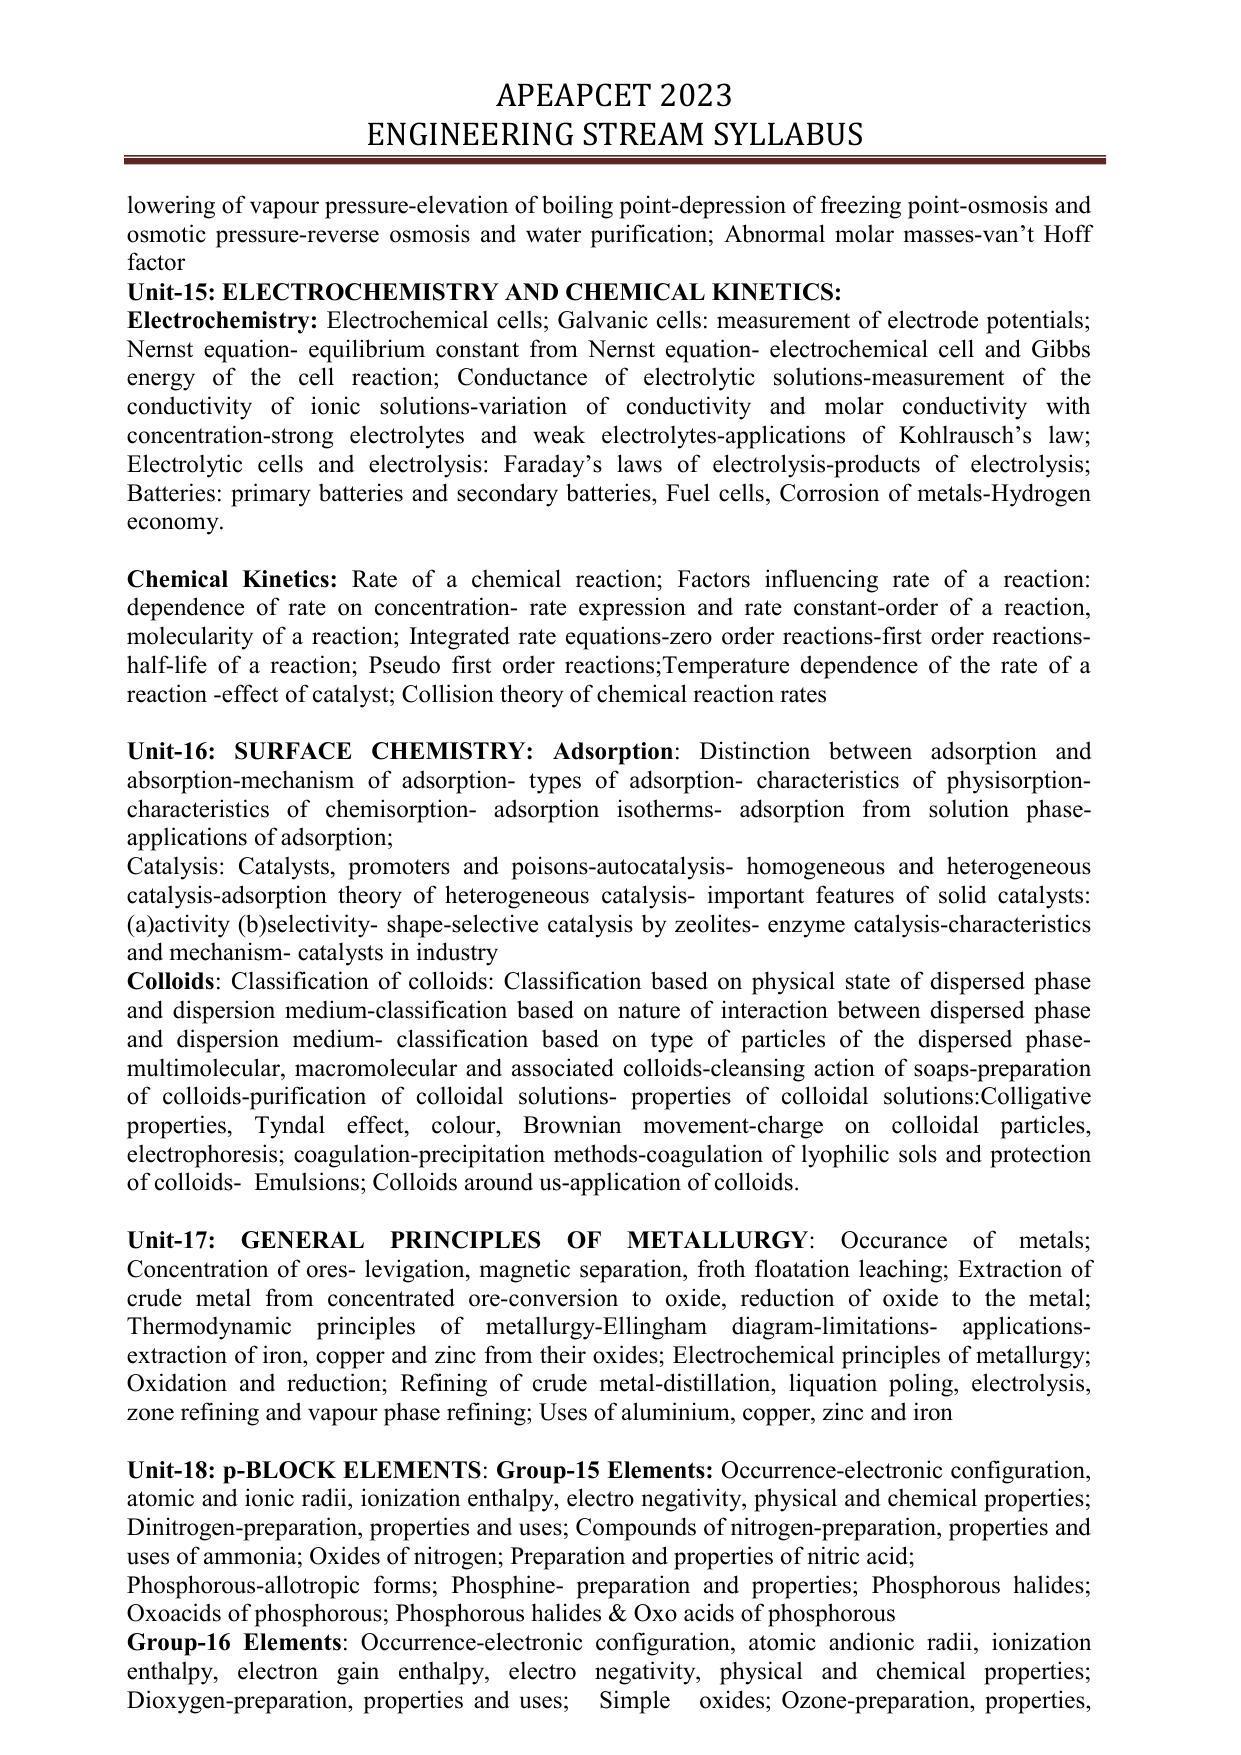 AP EAPCET Engineering Syllabus - Page 11